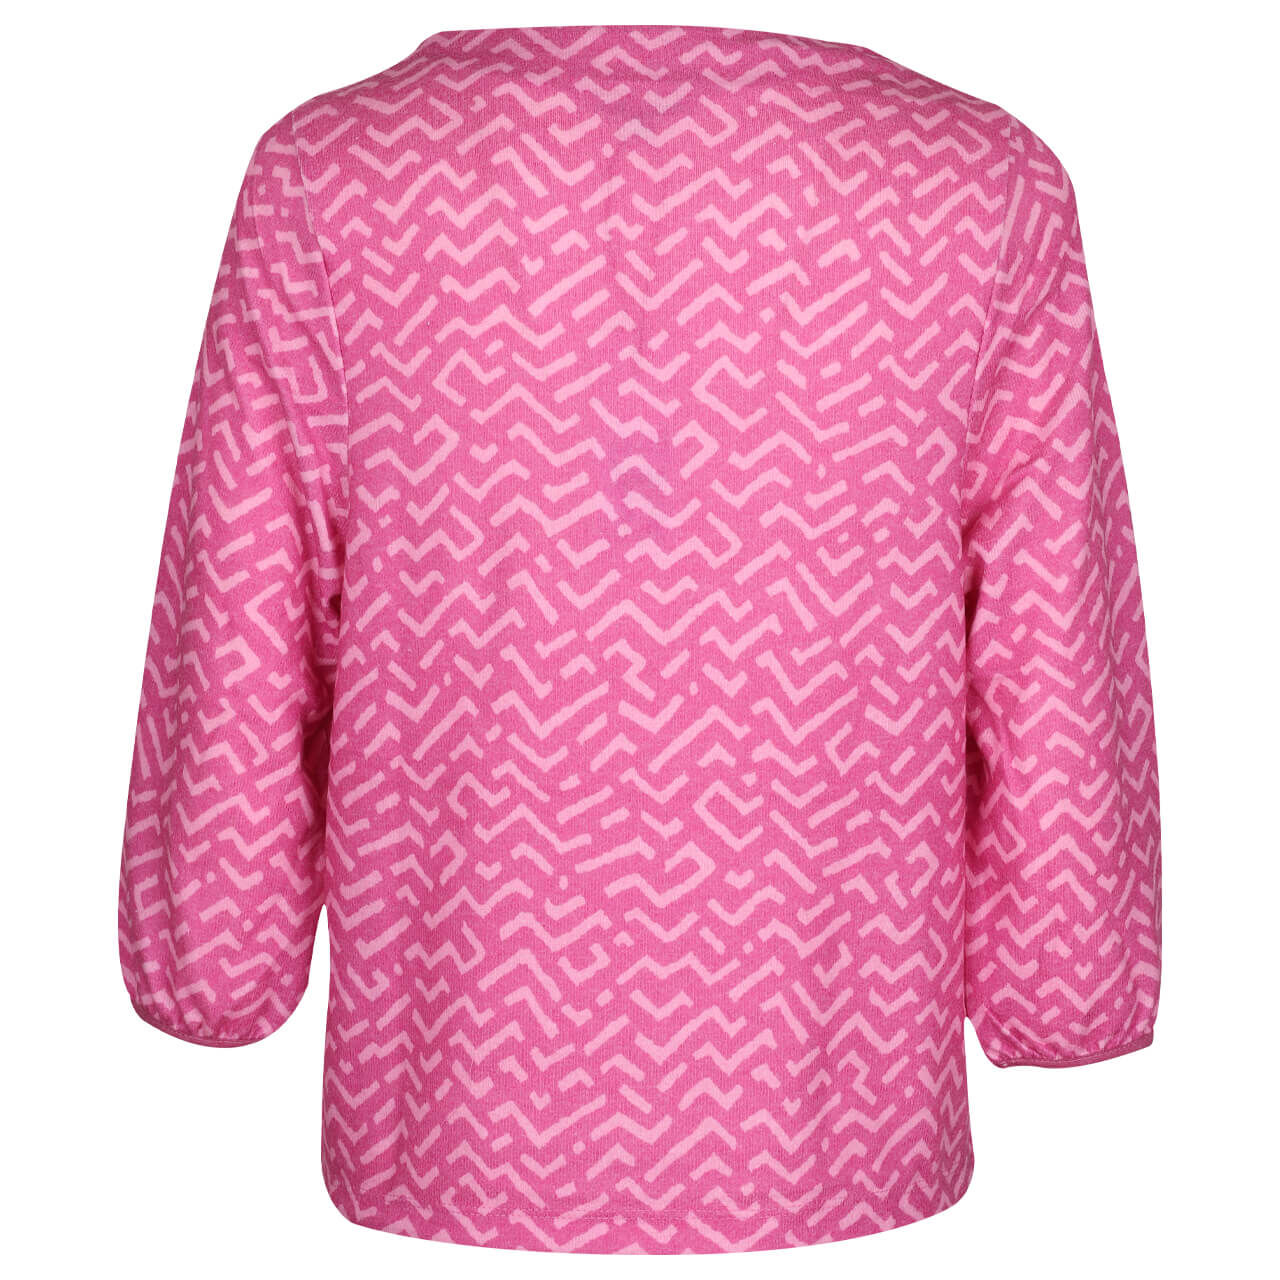 Street One Soft Printed Turtle 3/4 Arm Shirt lavish pink